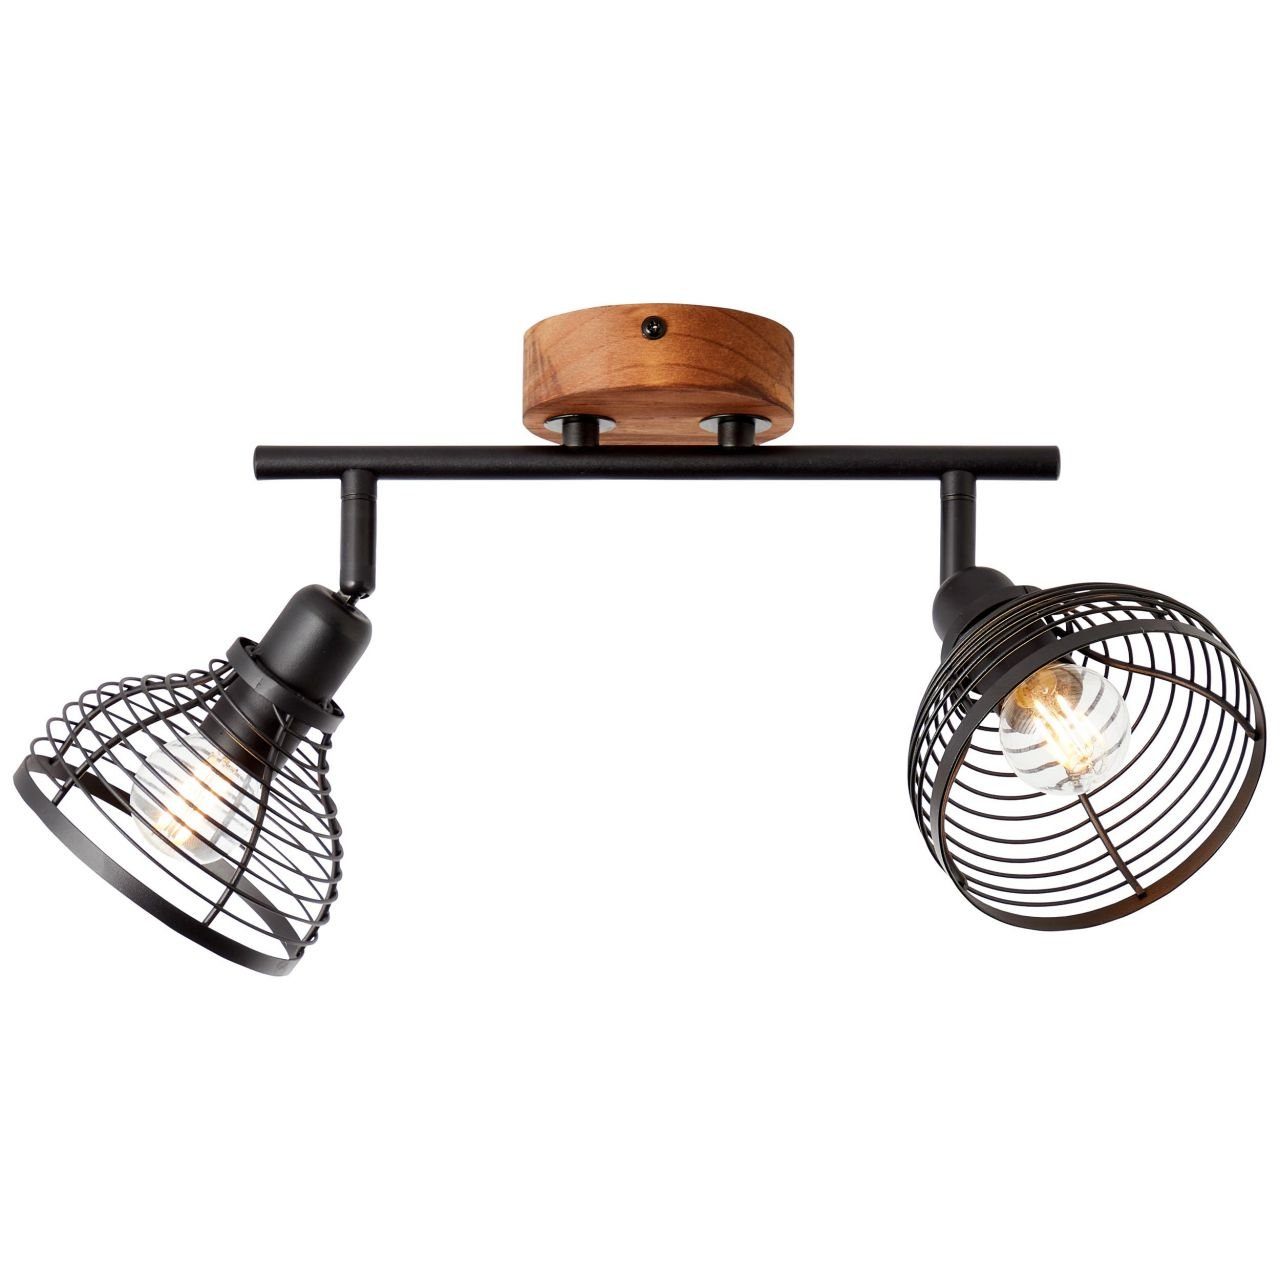 Lampe, schwarz/holzfarbend, 2x Avia, 2flg Spotrohr D45, E1 Avia Brilliant Metall/Holz, Deckenleuchte